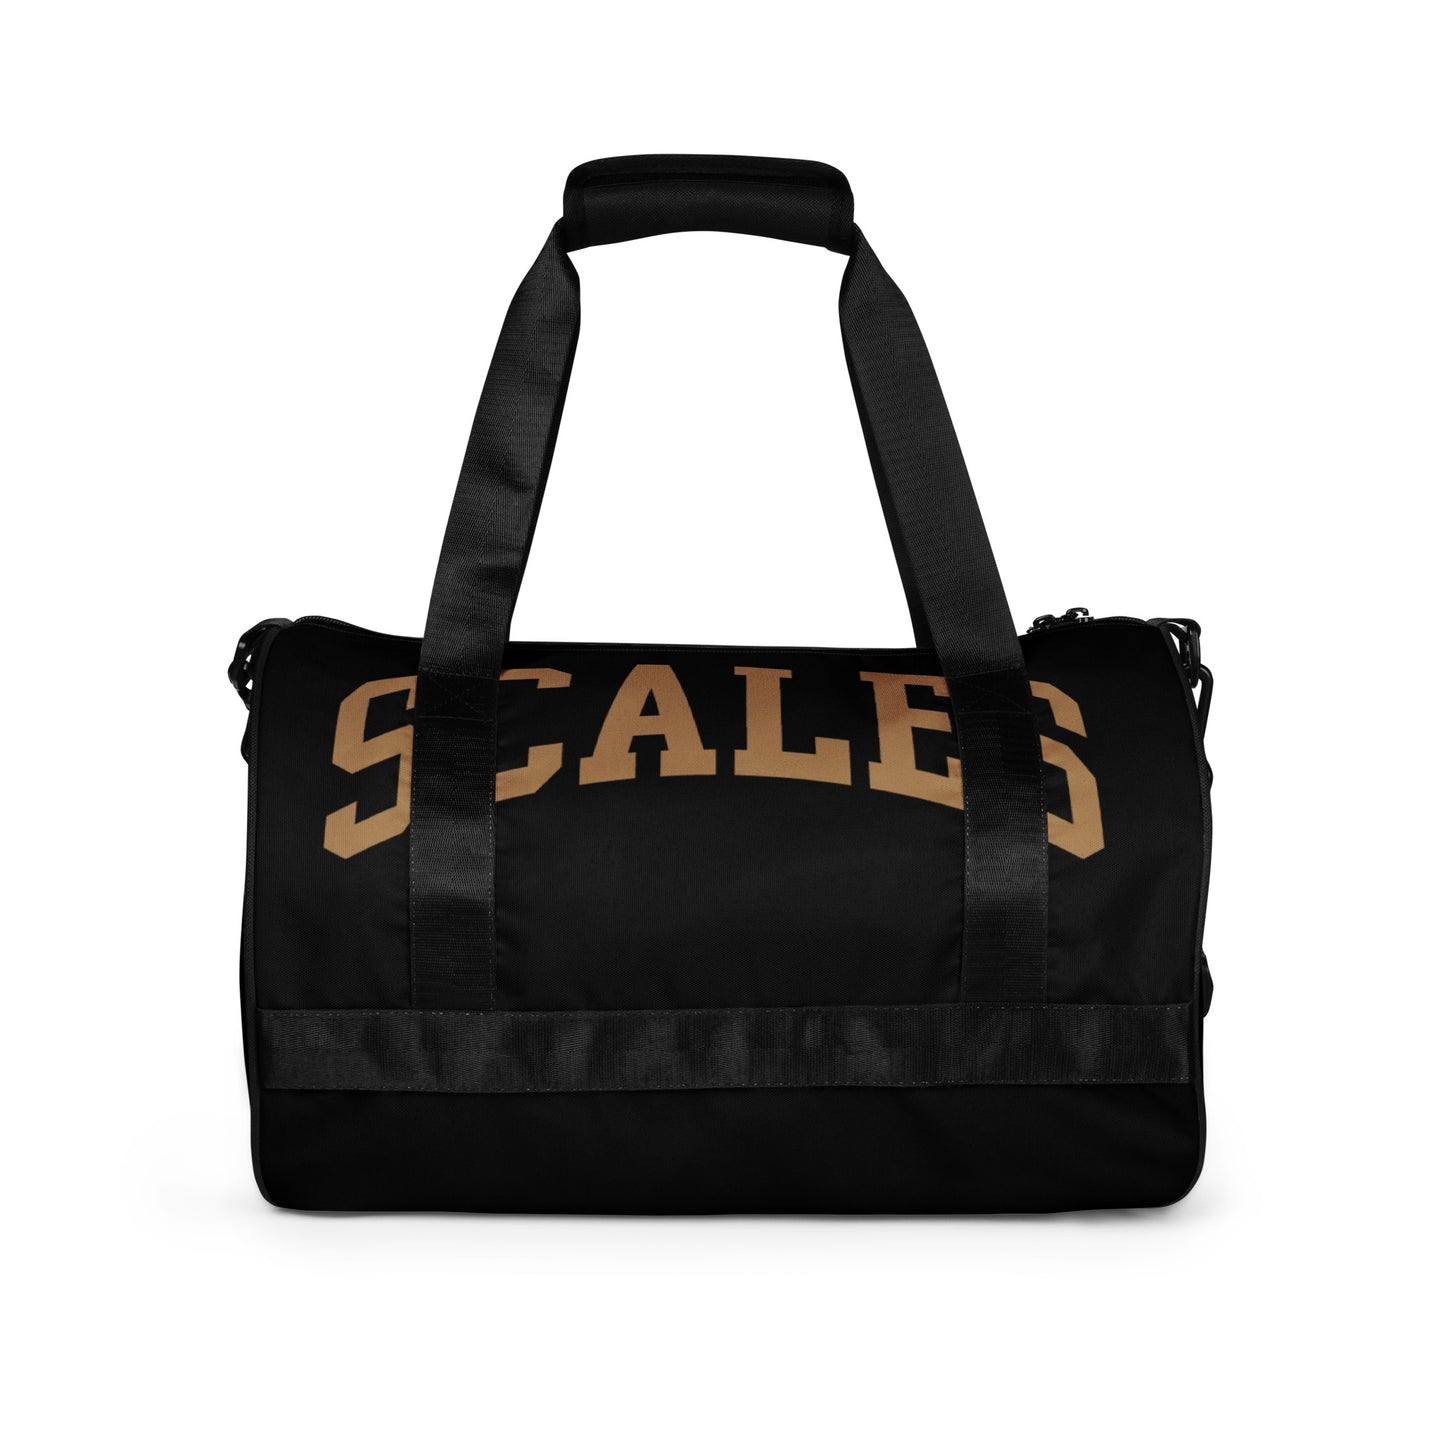 Black Scales gym bag